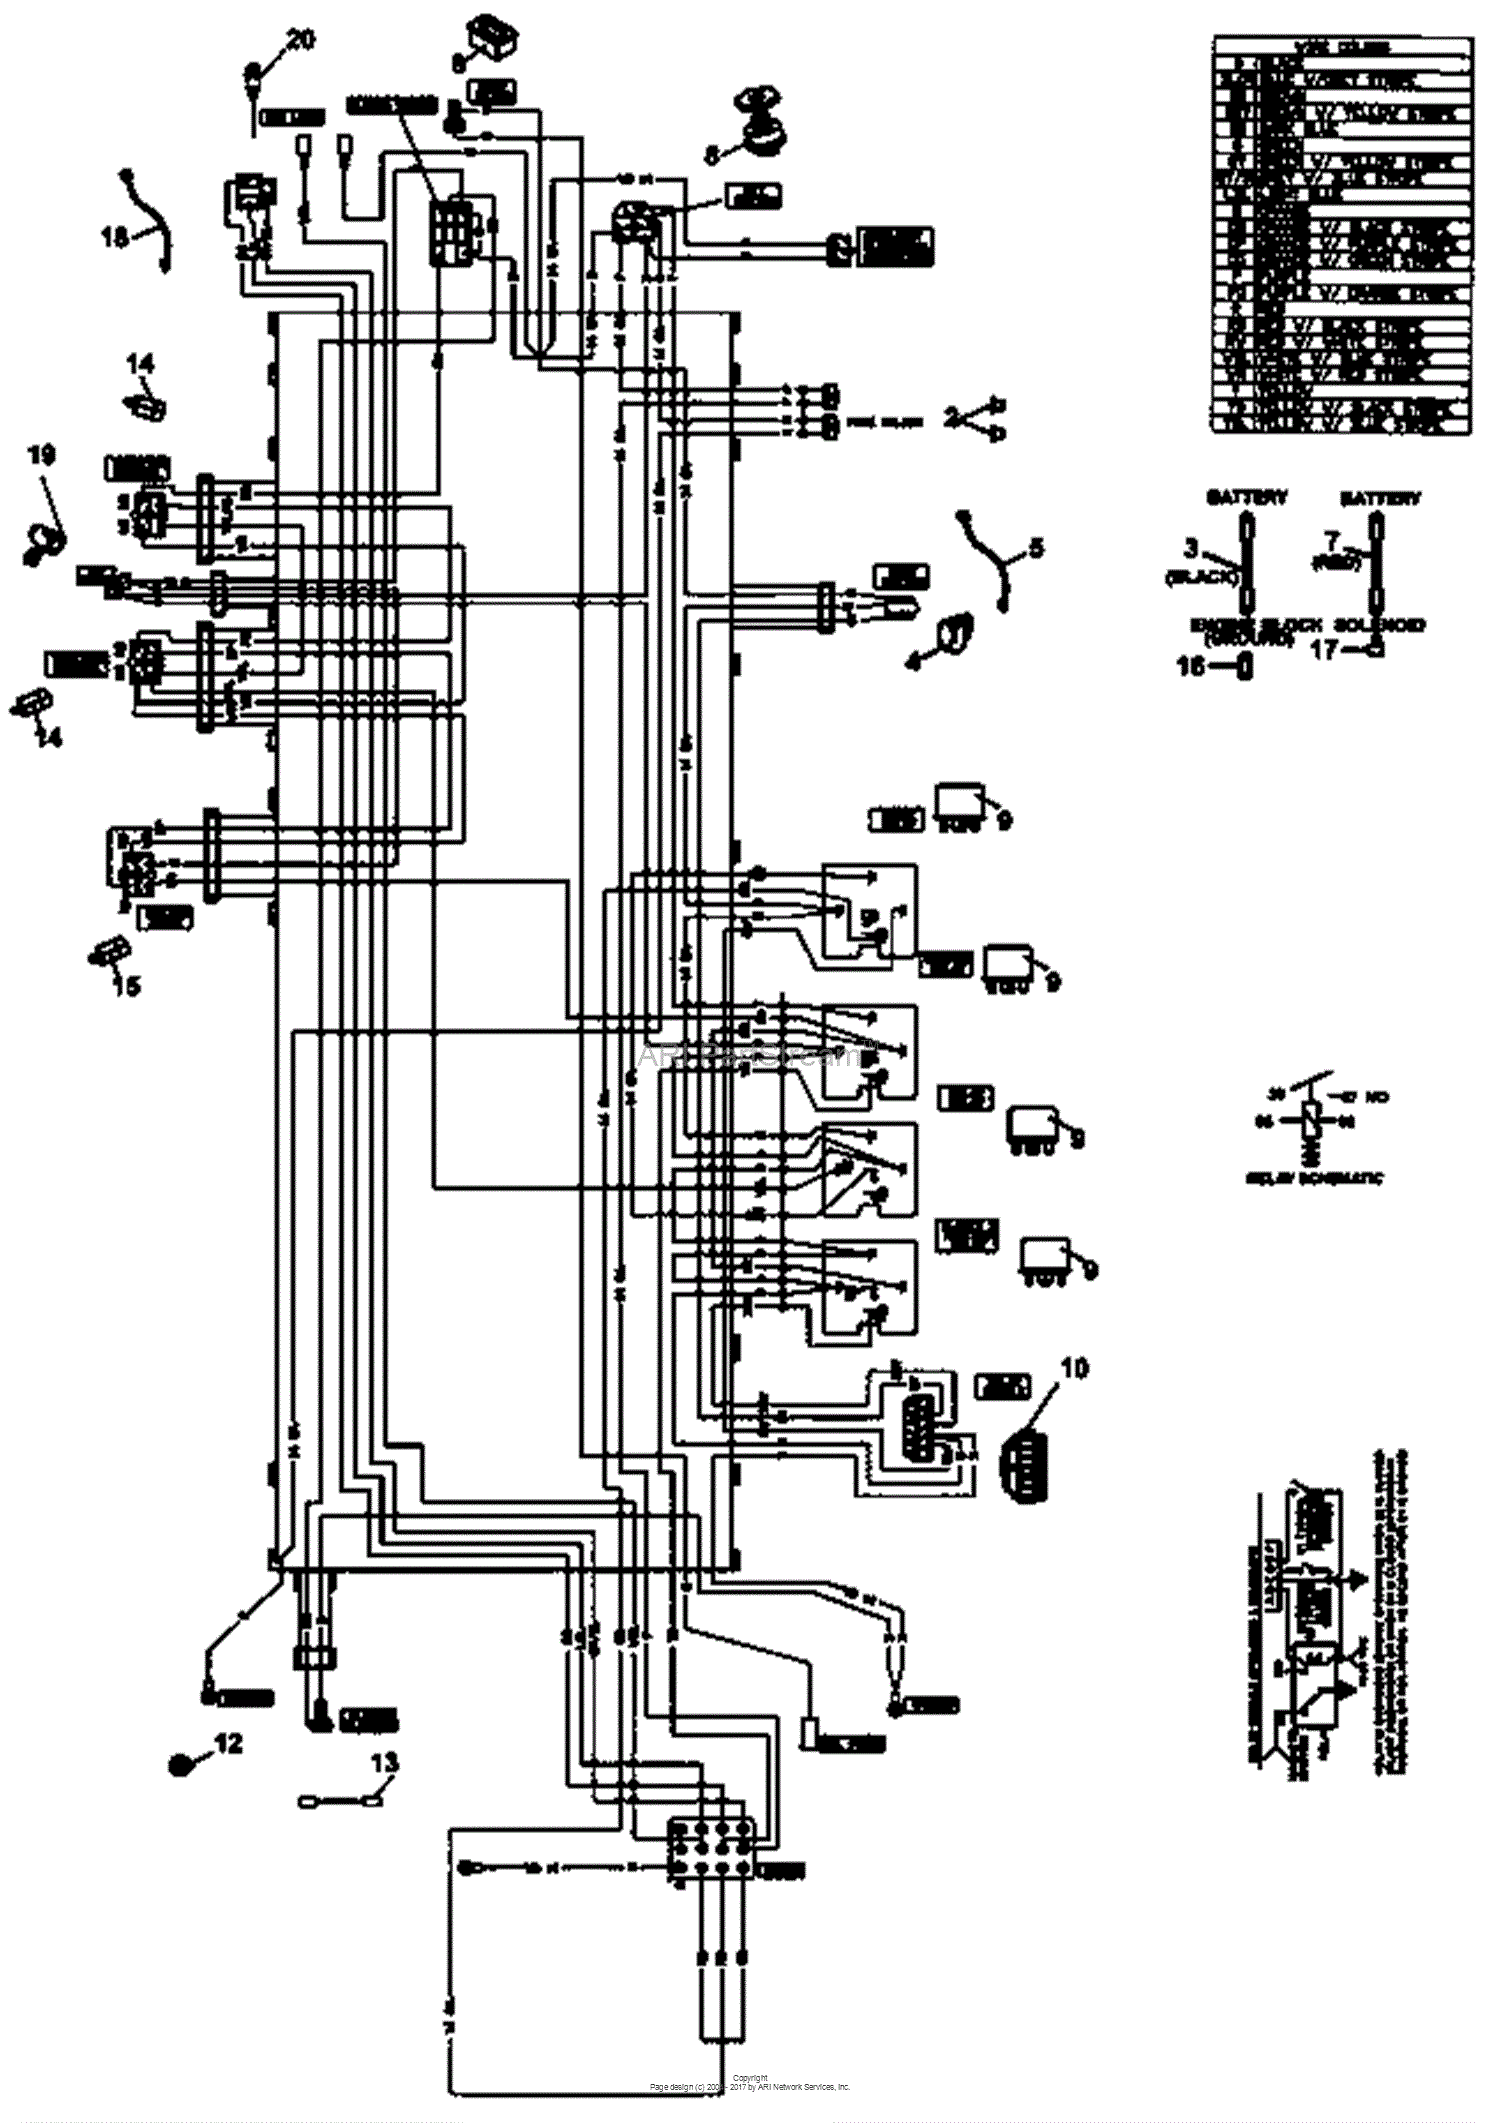 6 Pole Wiring Diagram H1 Wiring Diagram